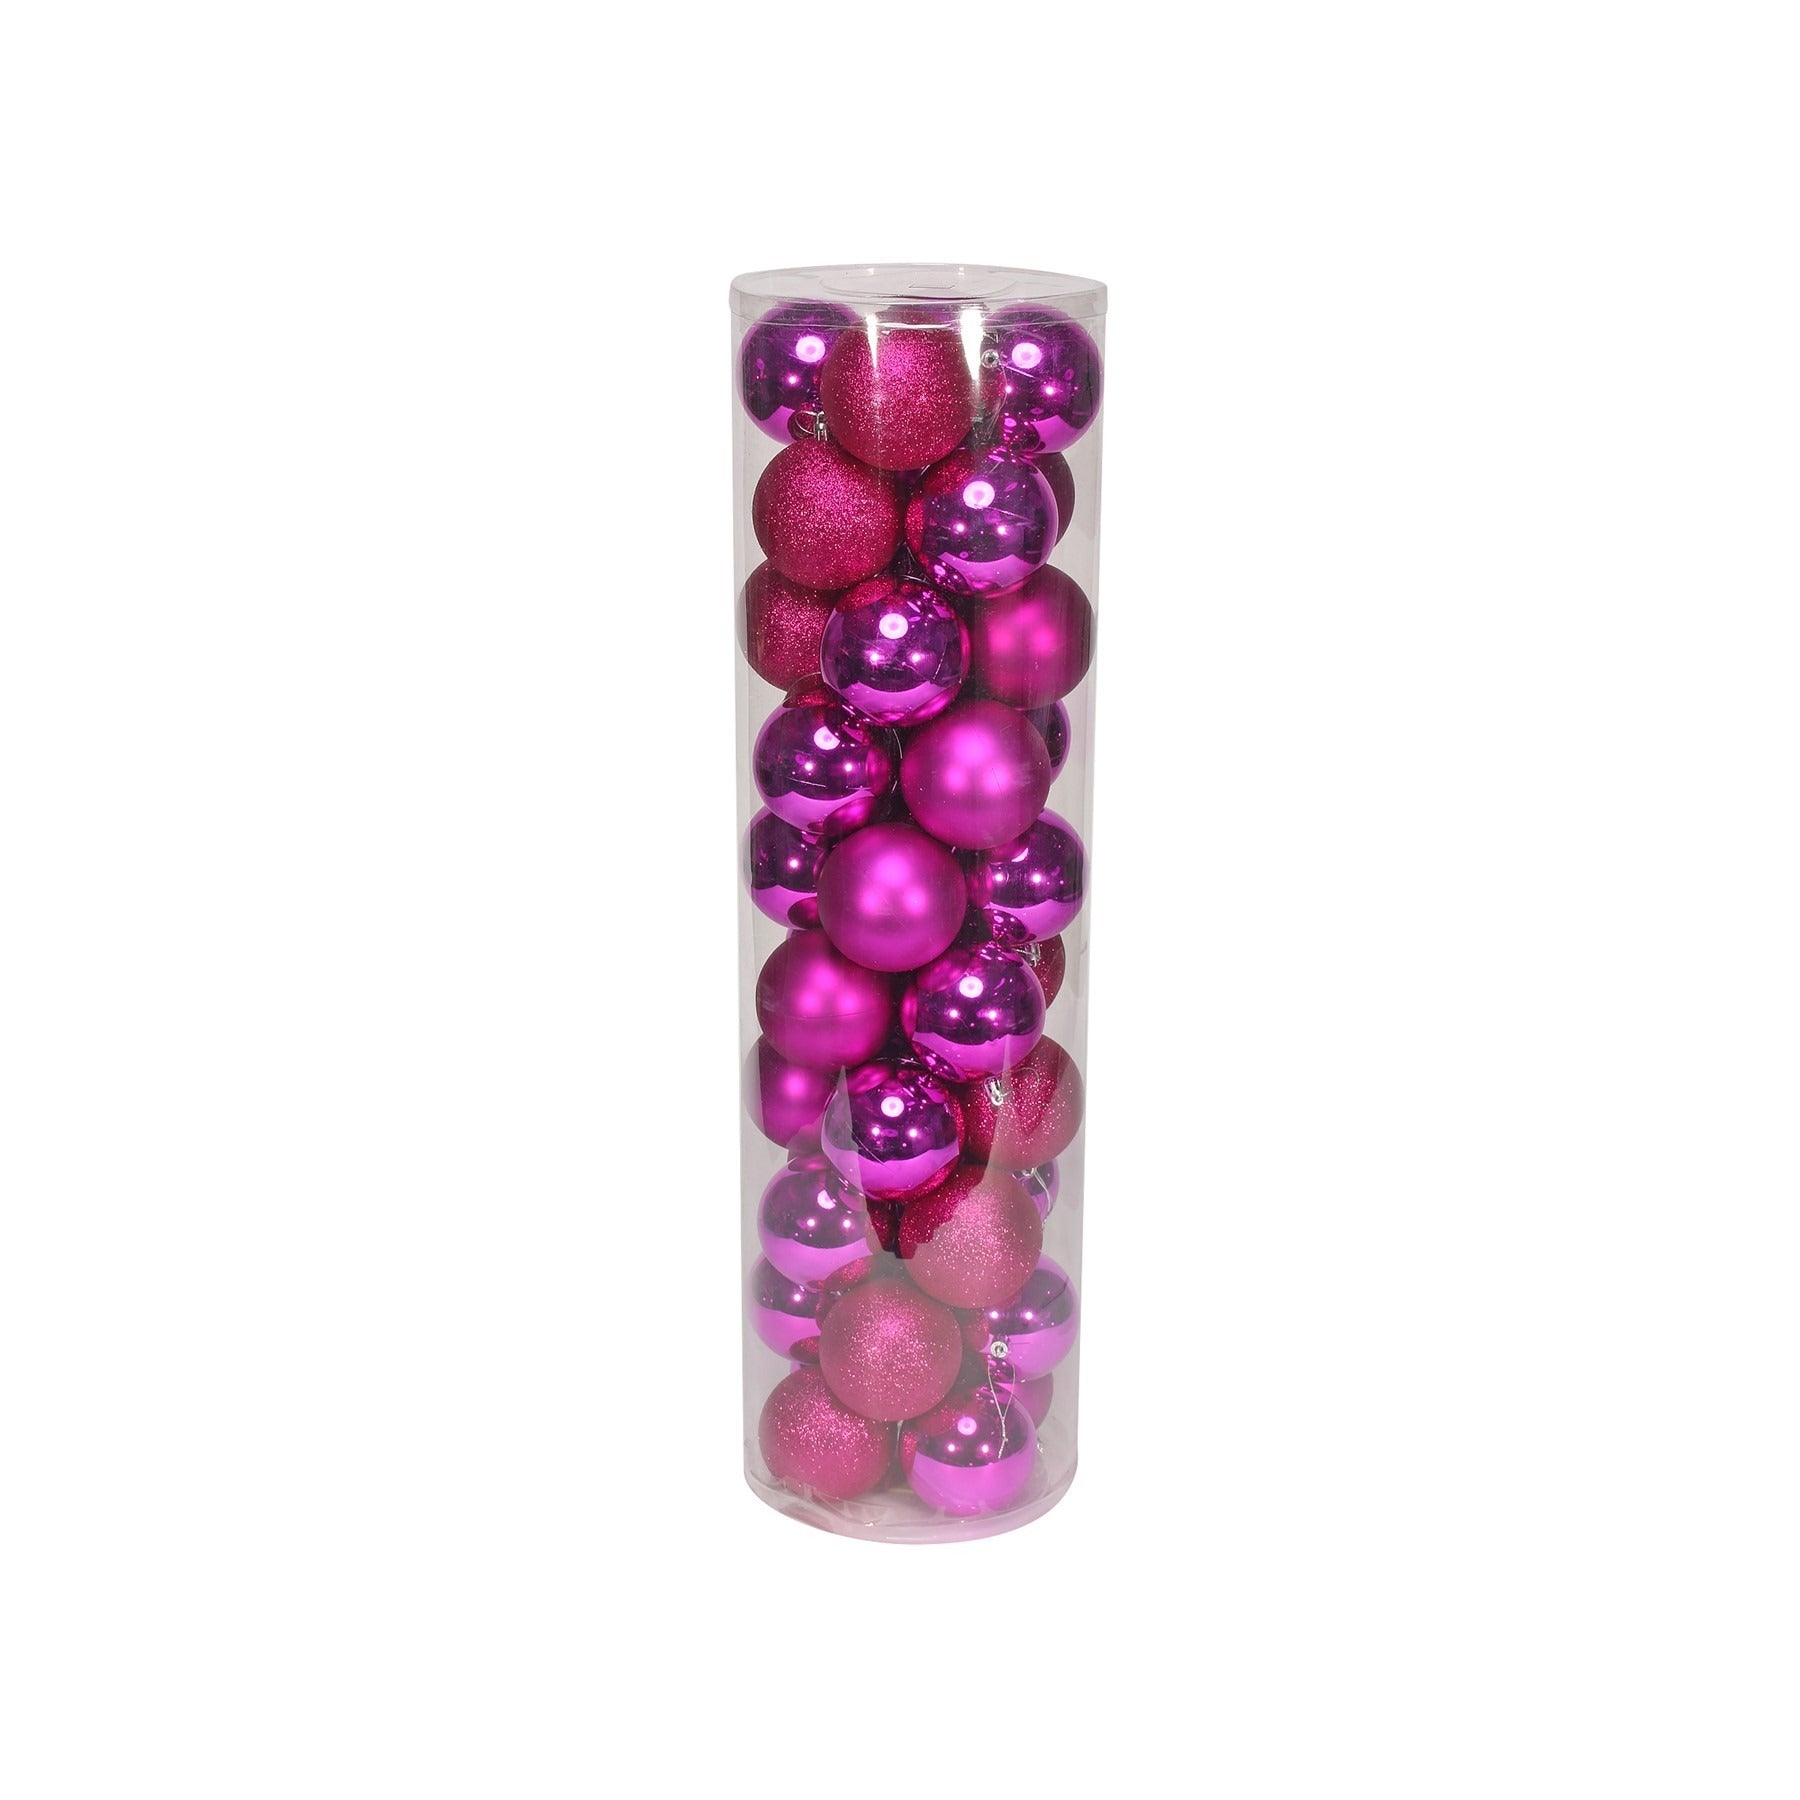 40 Hot Pink Baubles in Matt  Shiny & Glitter Finish (8cm)